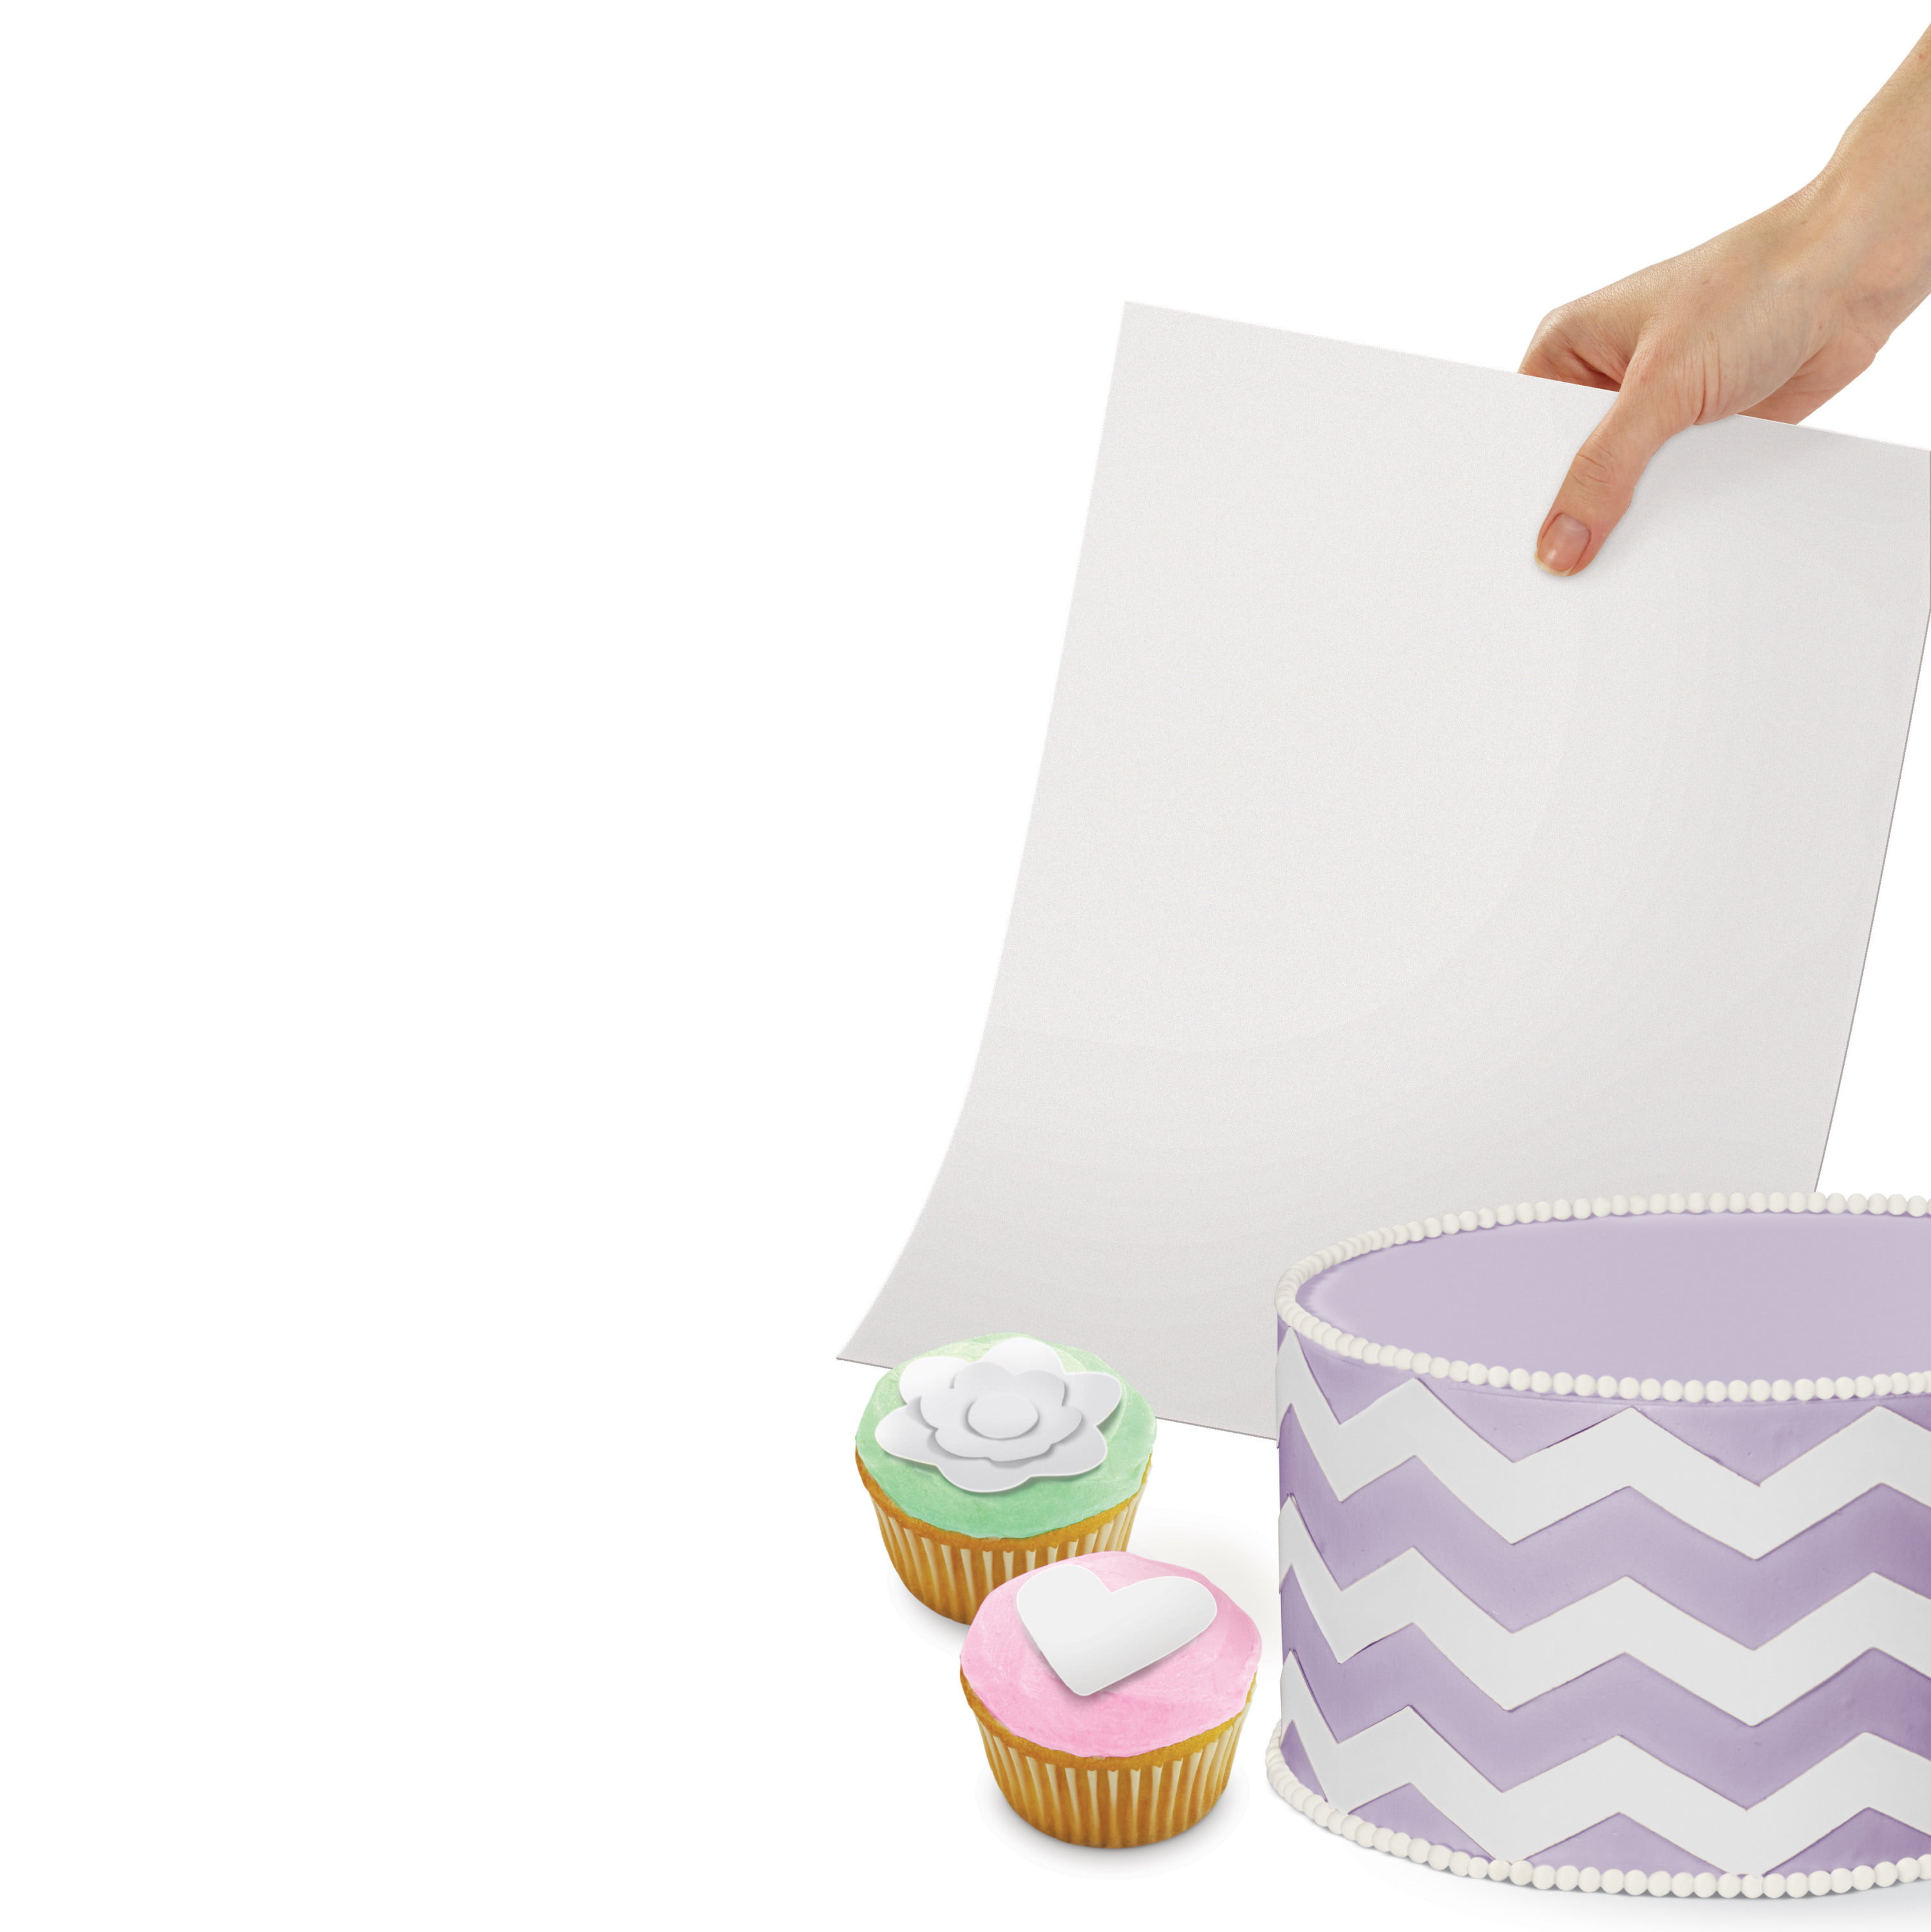 Wilton White Sugar Sheets Edible Decorating Paper - 0.85 oz. - Cake  Decorating Supplies